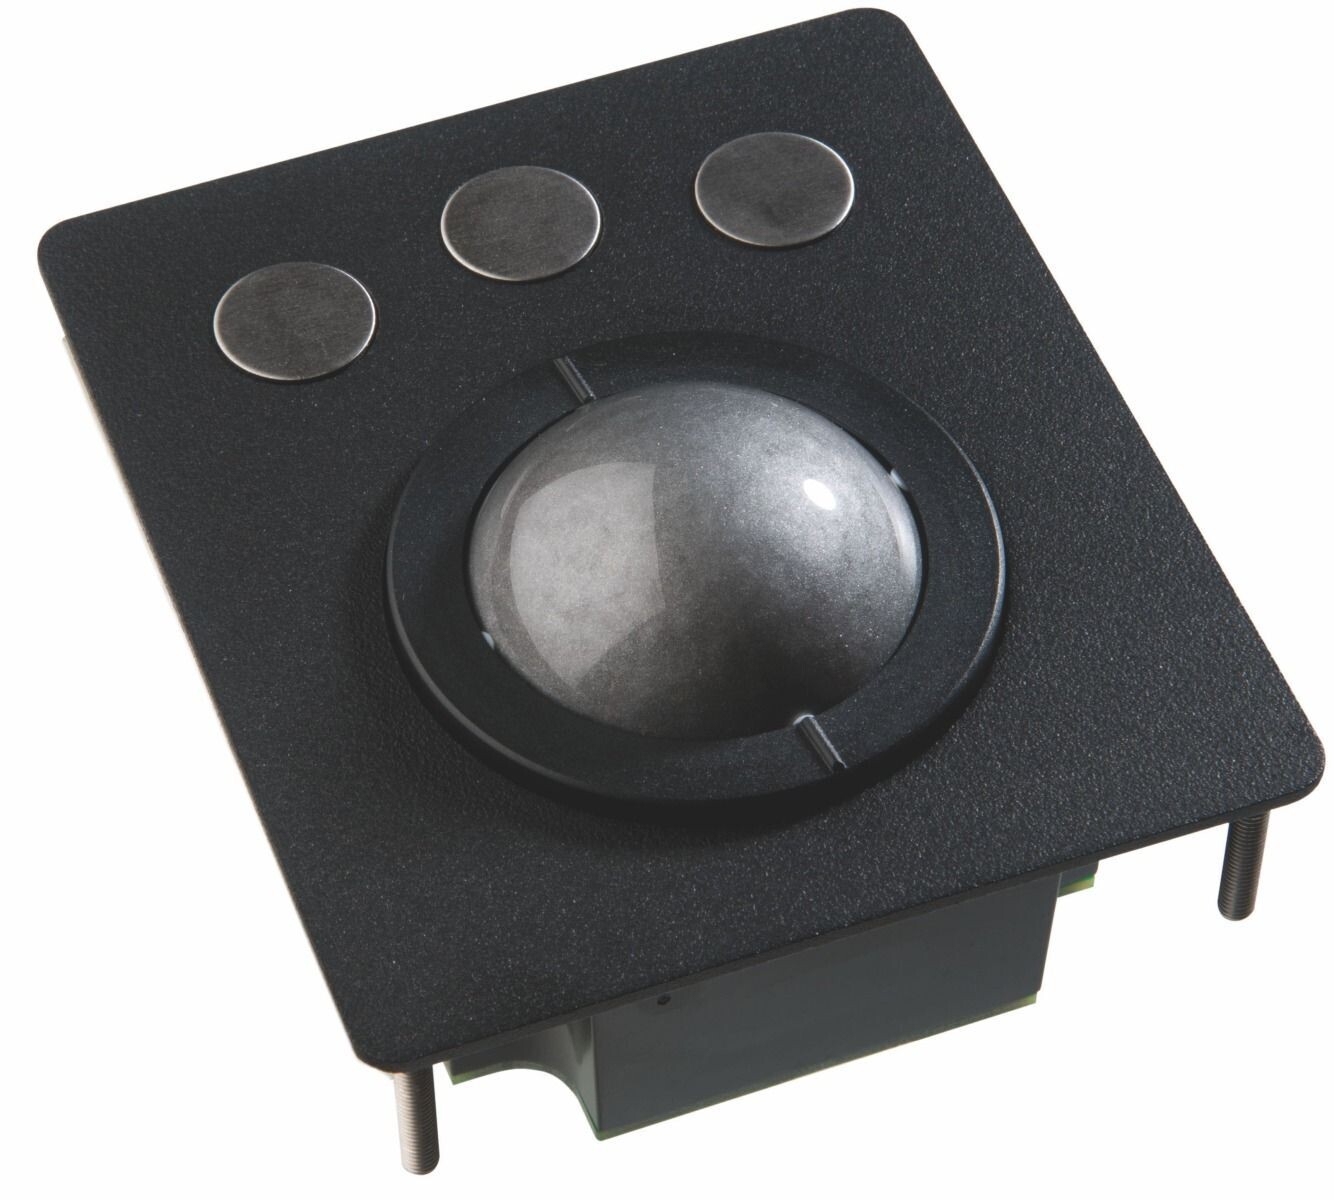 NSI Industrial waterproof panel mount trackballs